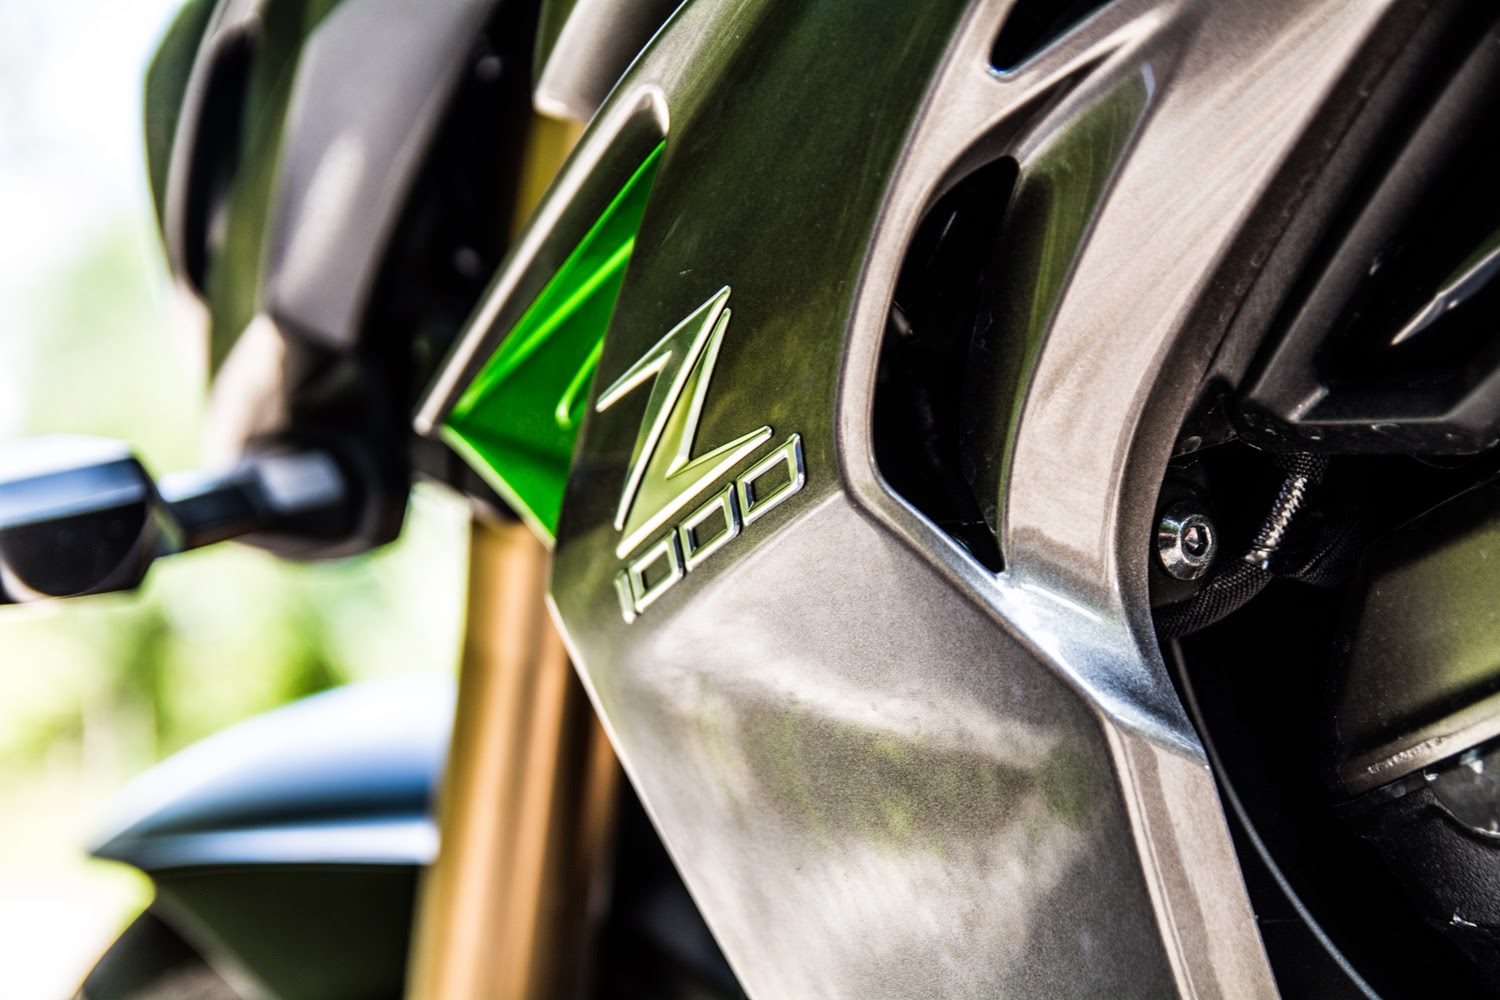 2014 Kawasaki Z1000 ABS | Photo © Christoph Adamek/autofilou.at